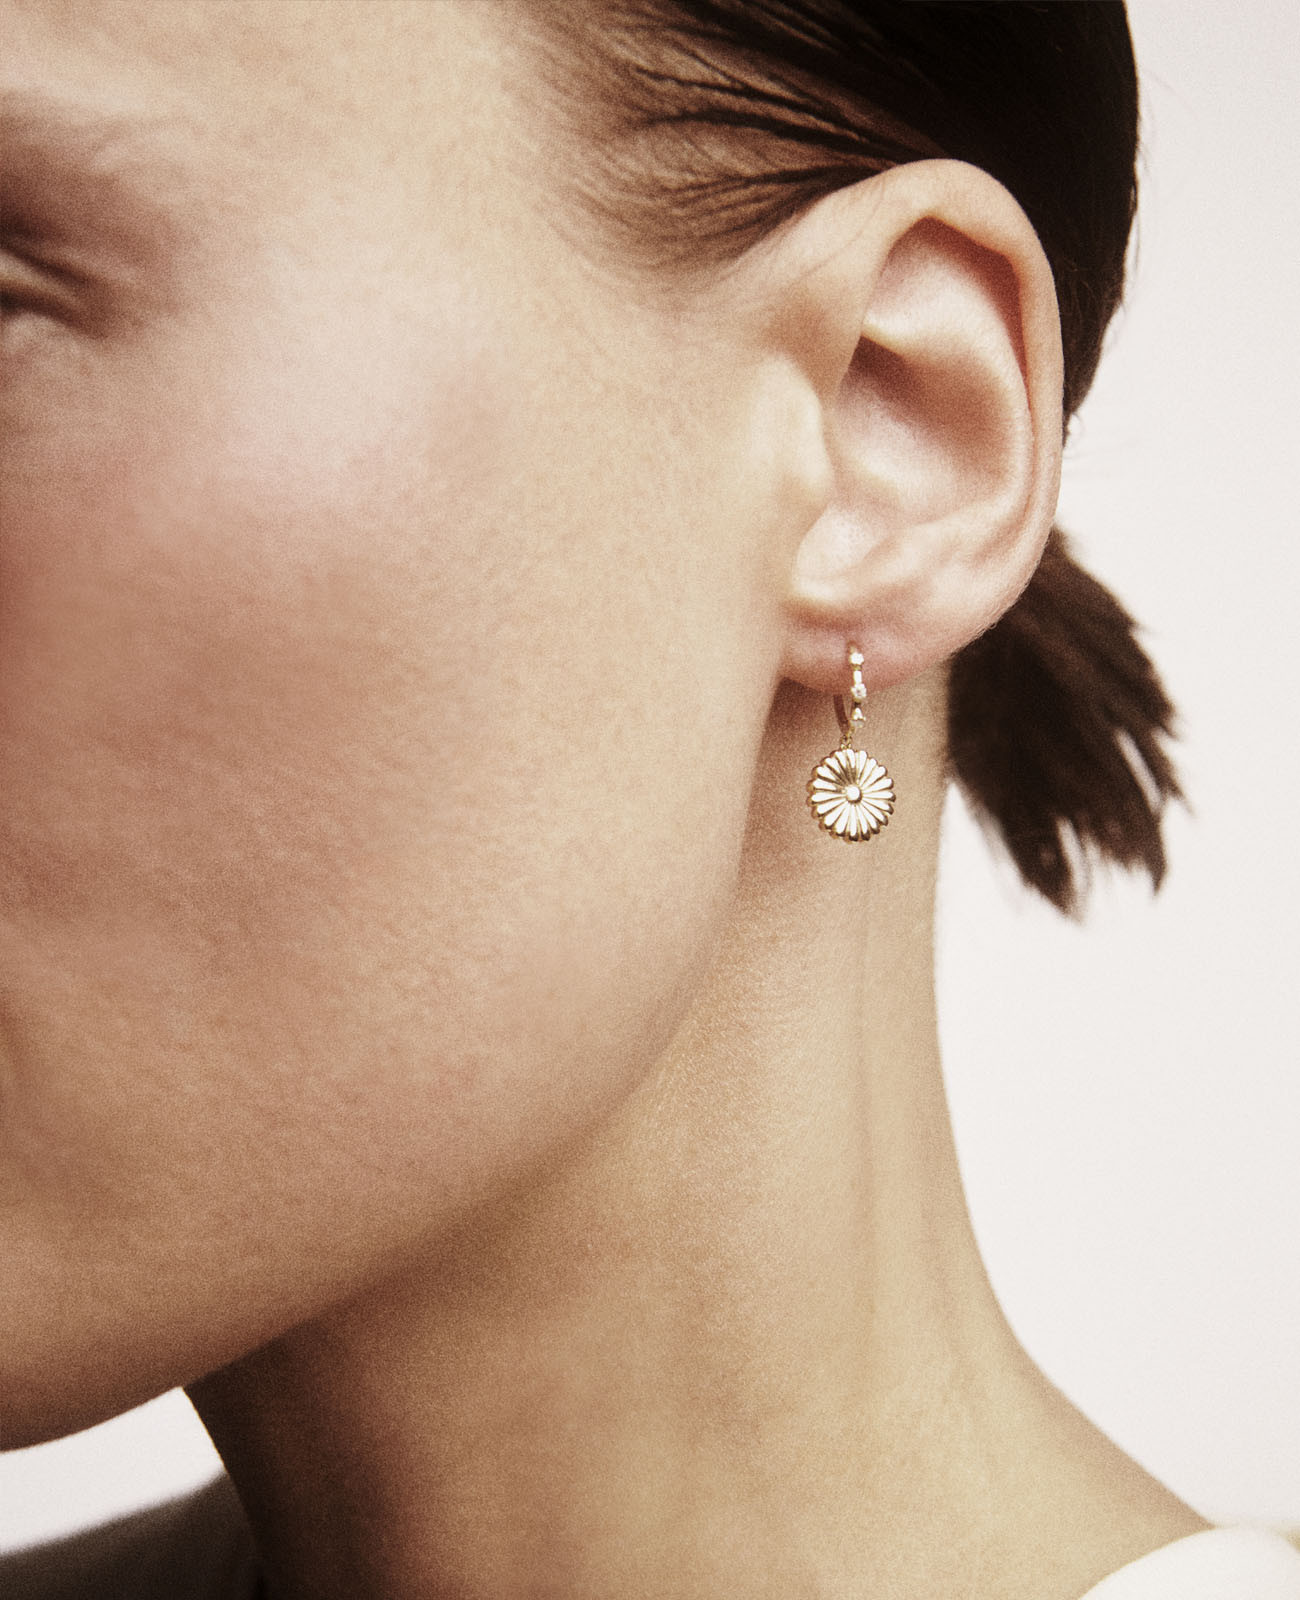 FRIDA N°2 earring pascale monvoisin jewelry paris